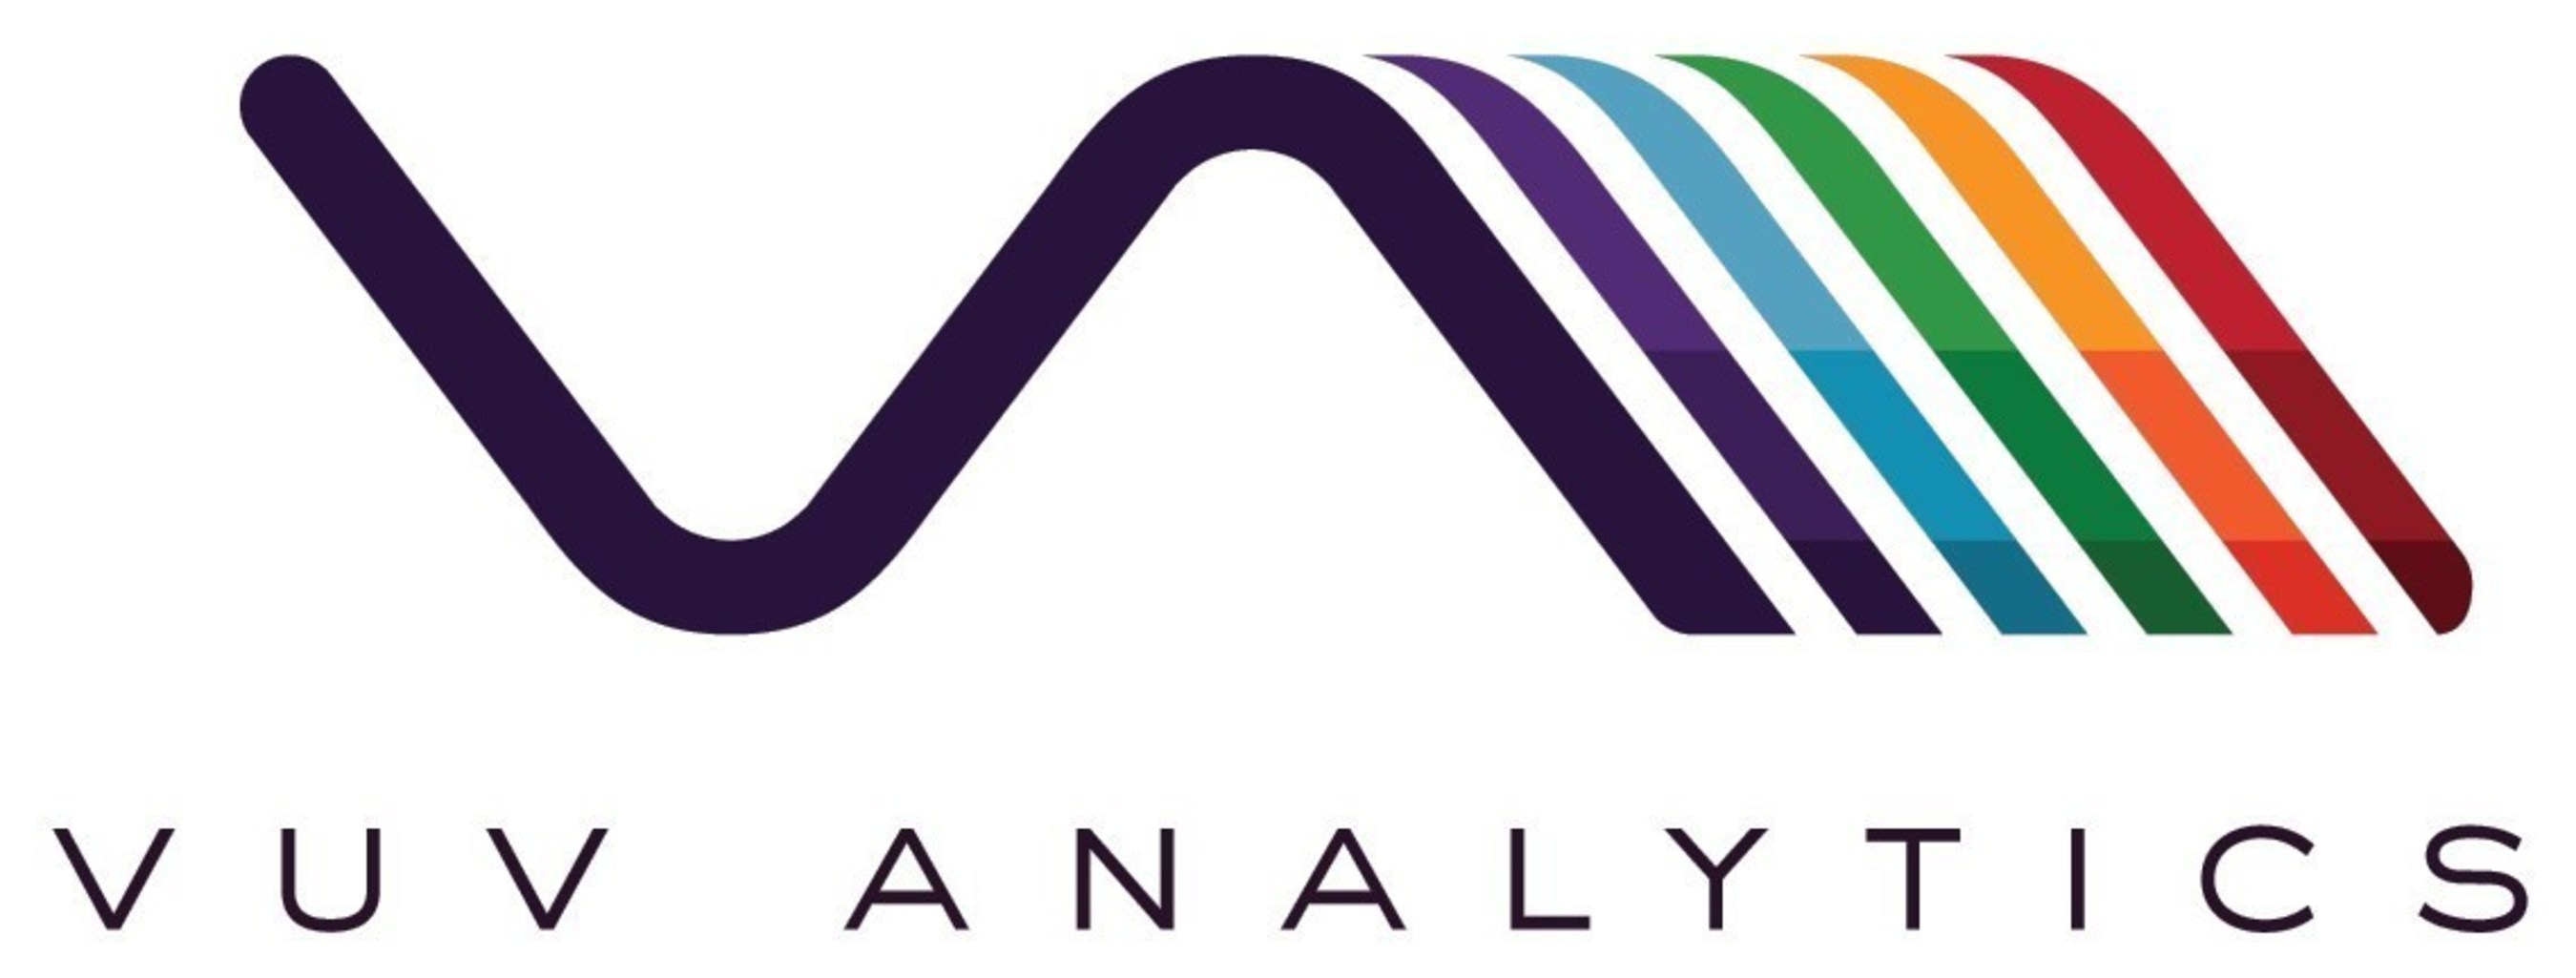 VUV Analytics is the leader in vacuum ultraviolet (VUV) absorption spectroscopy.